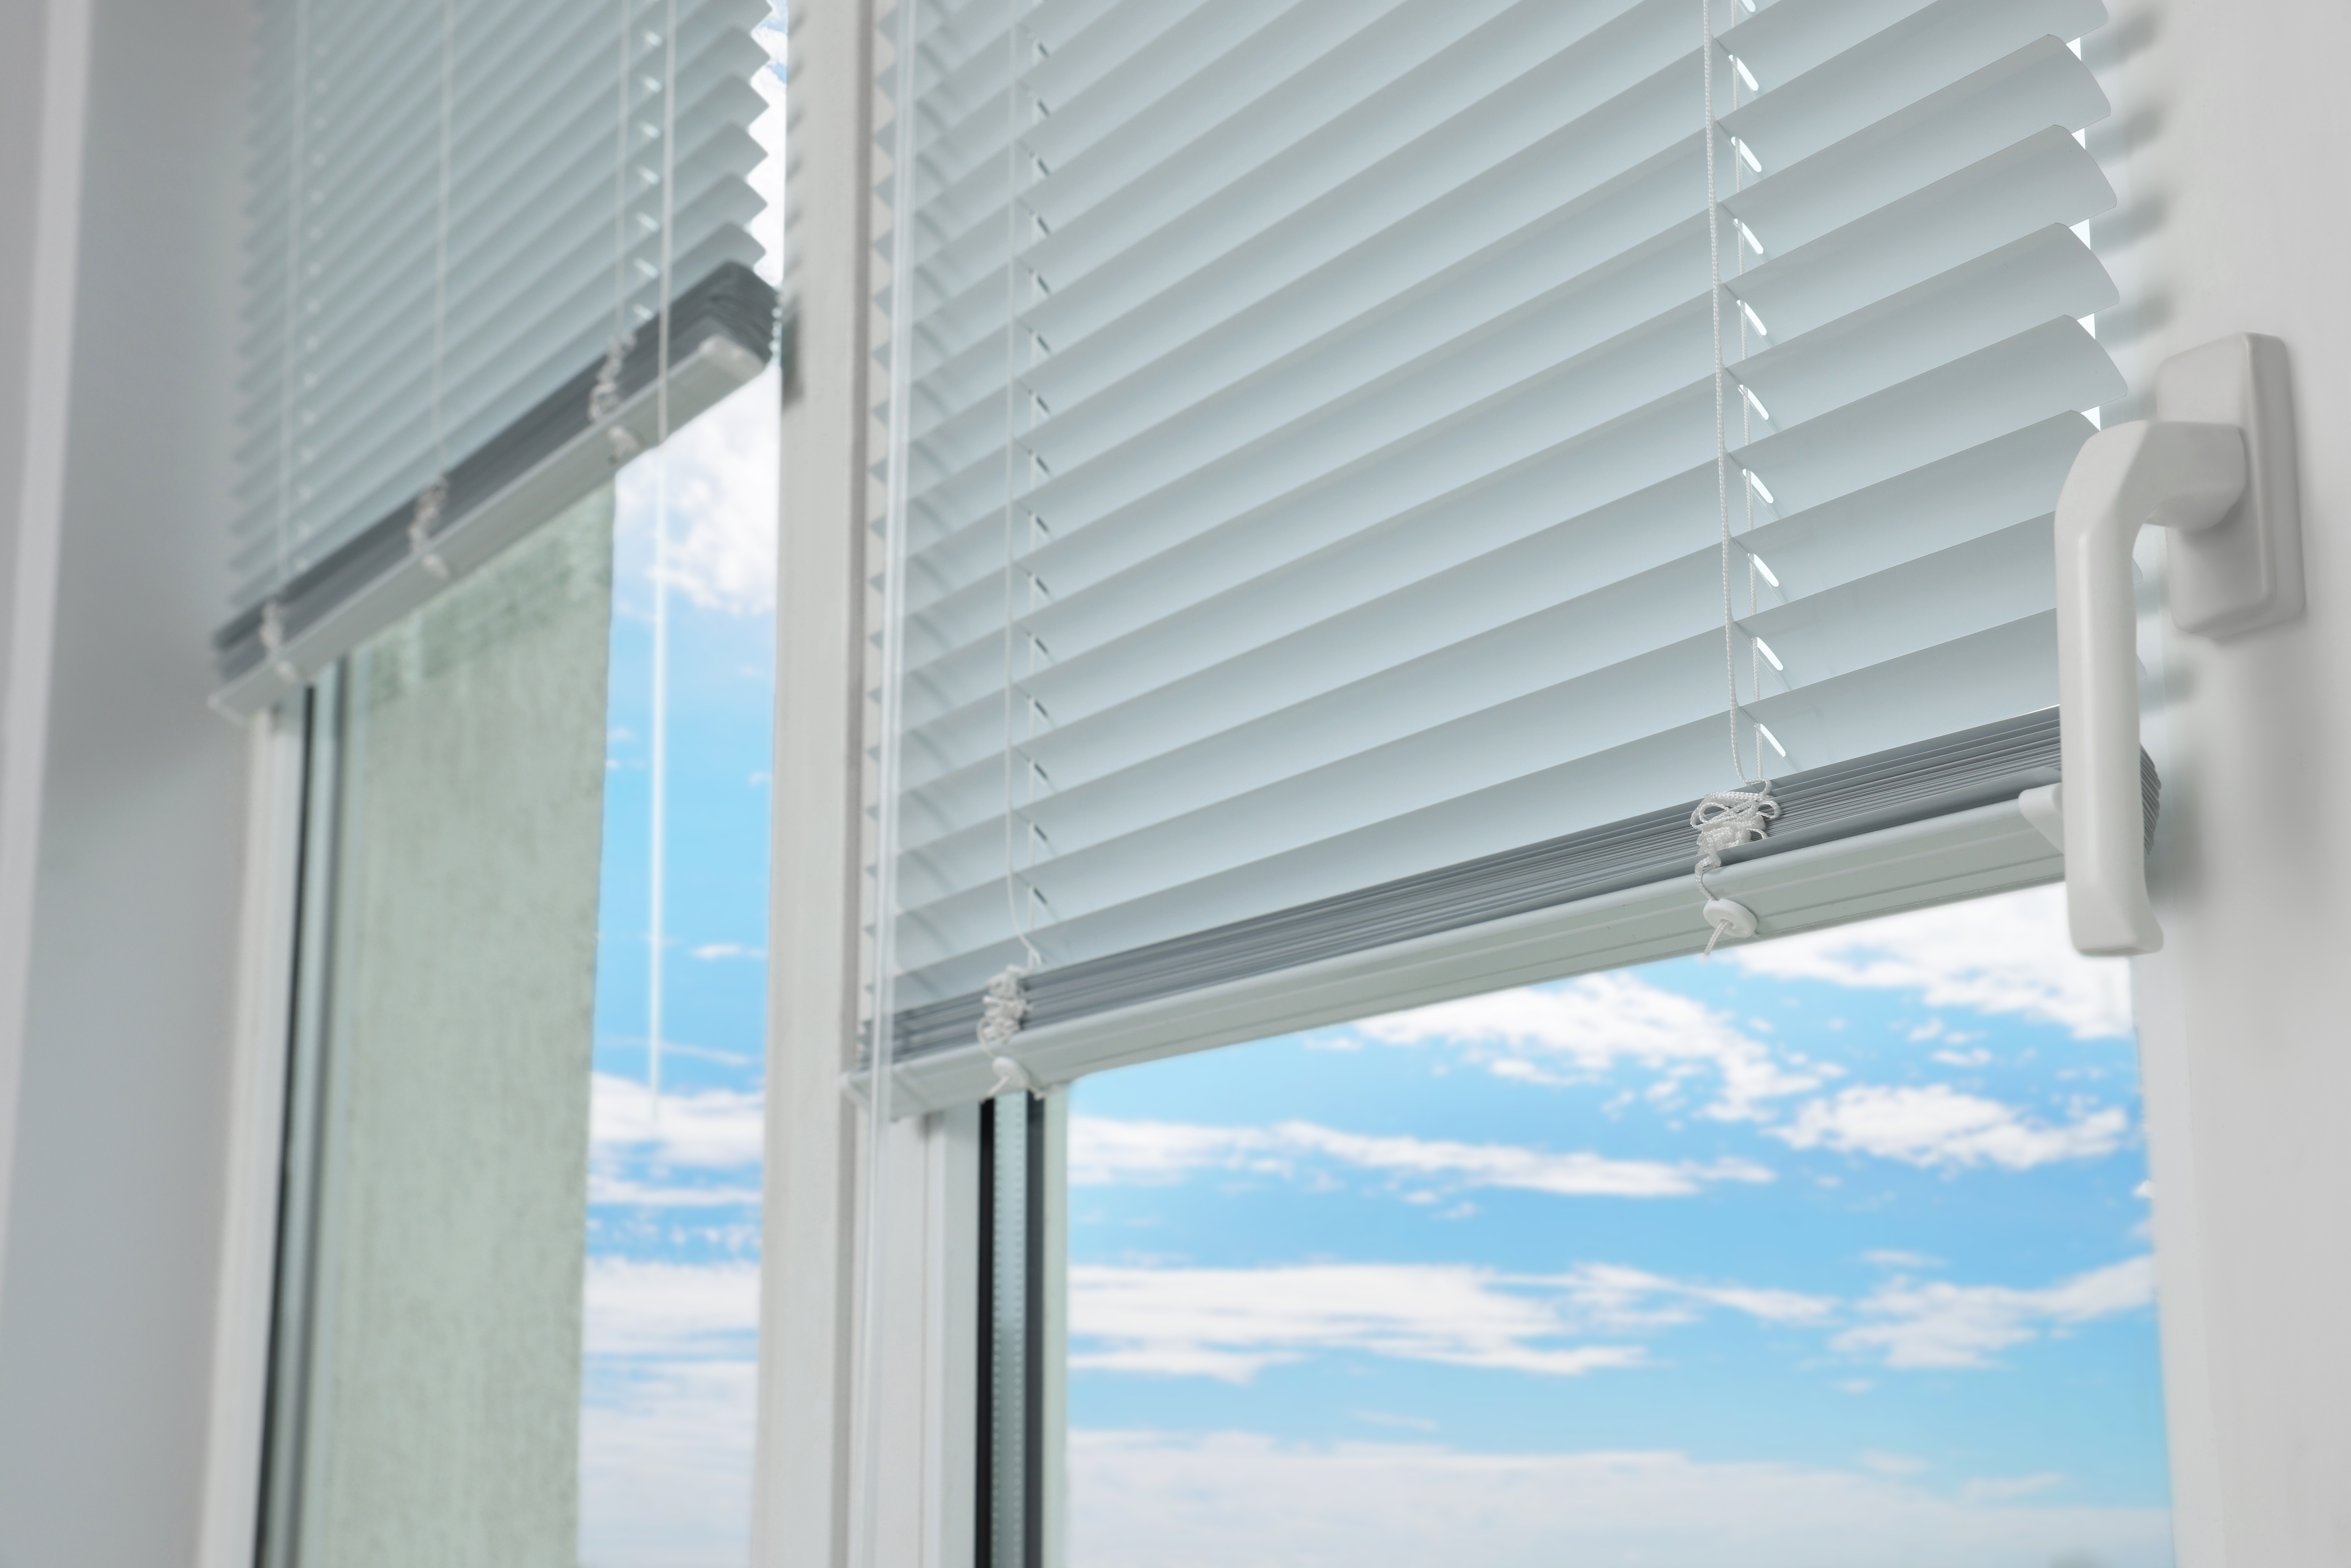 Stylish window with horizontal blinds, closeup view